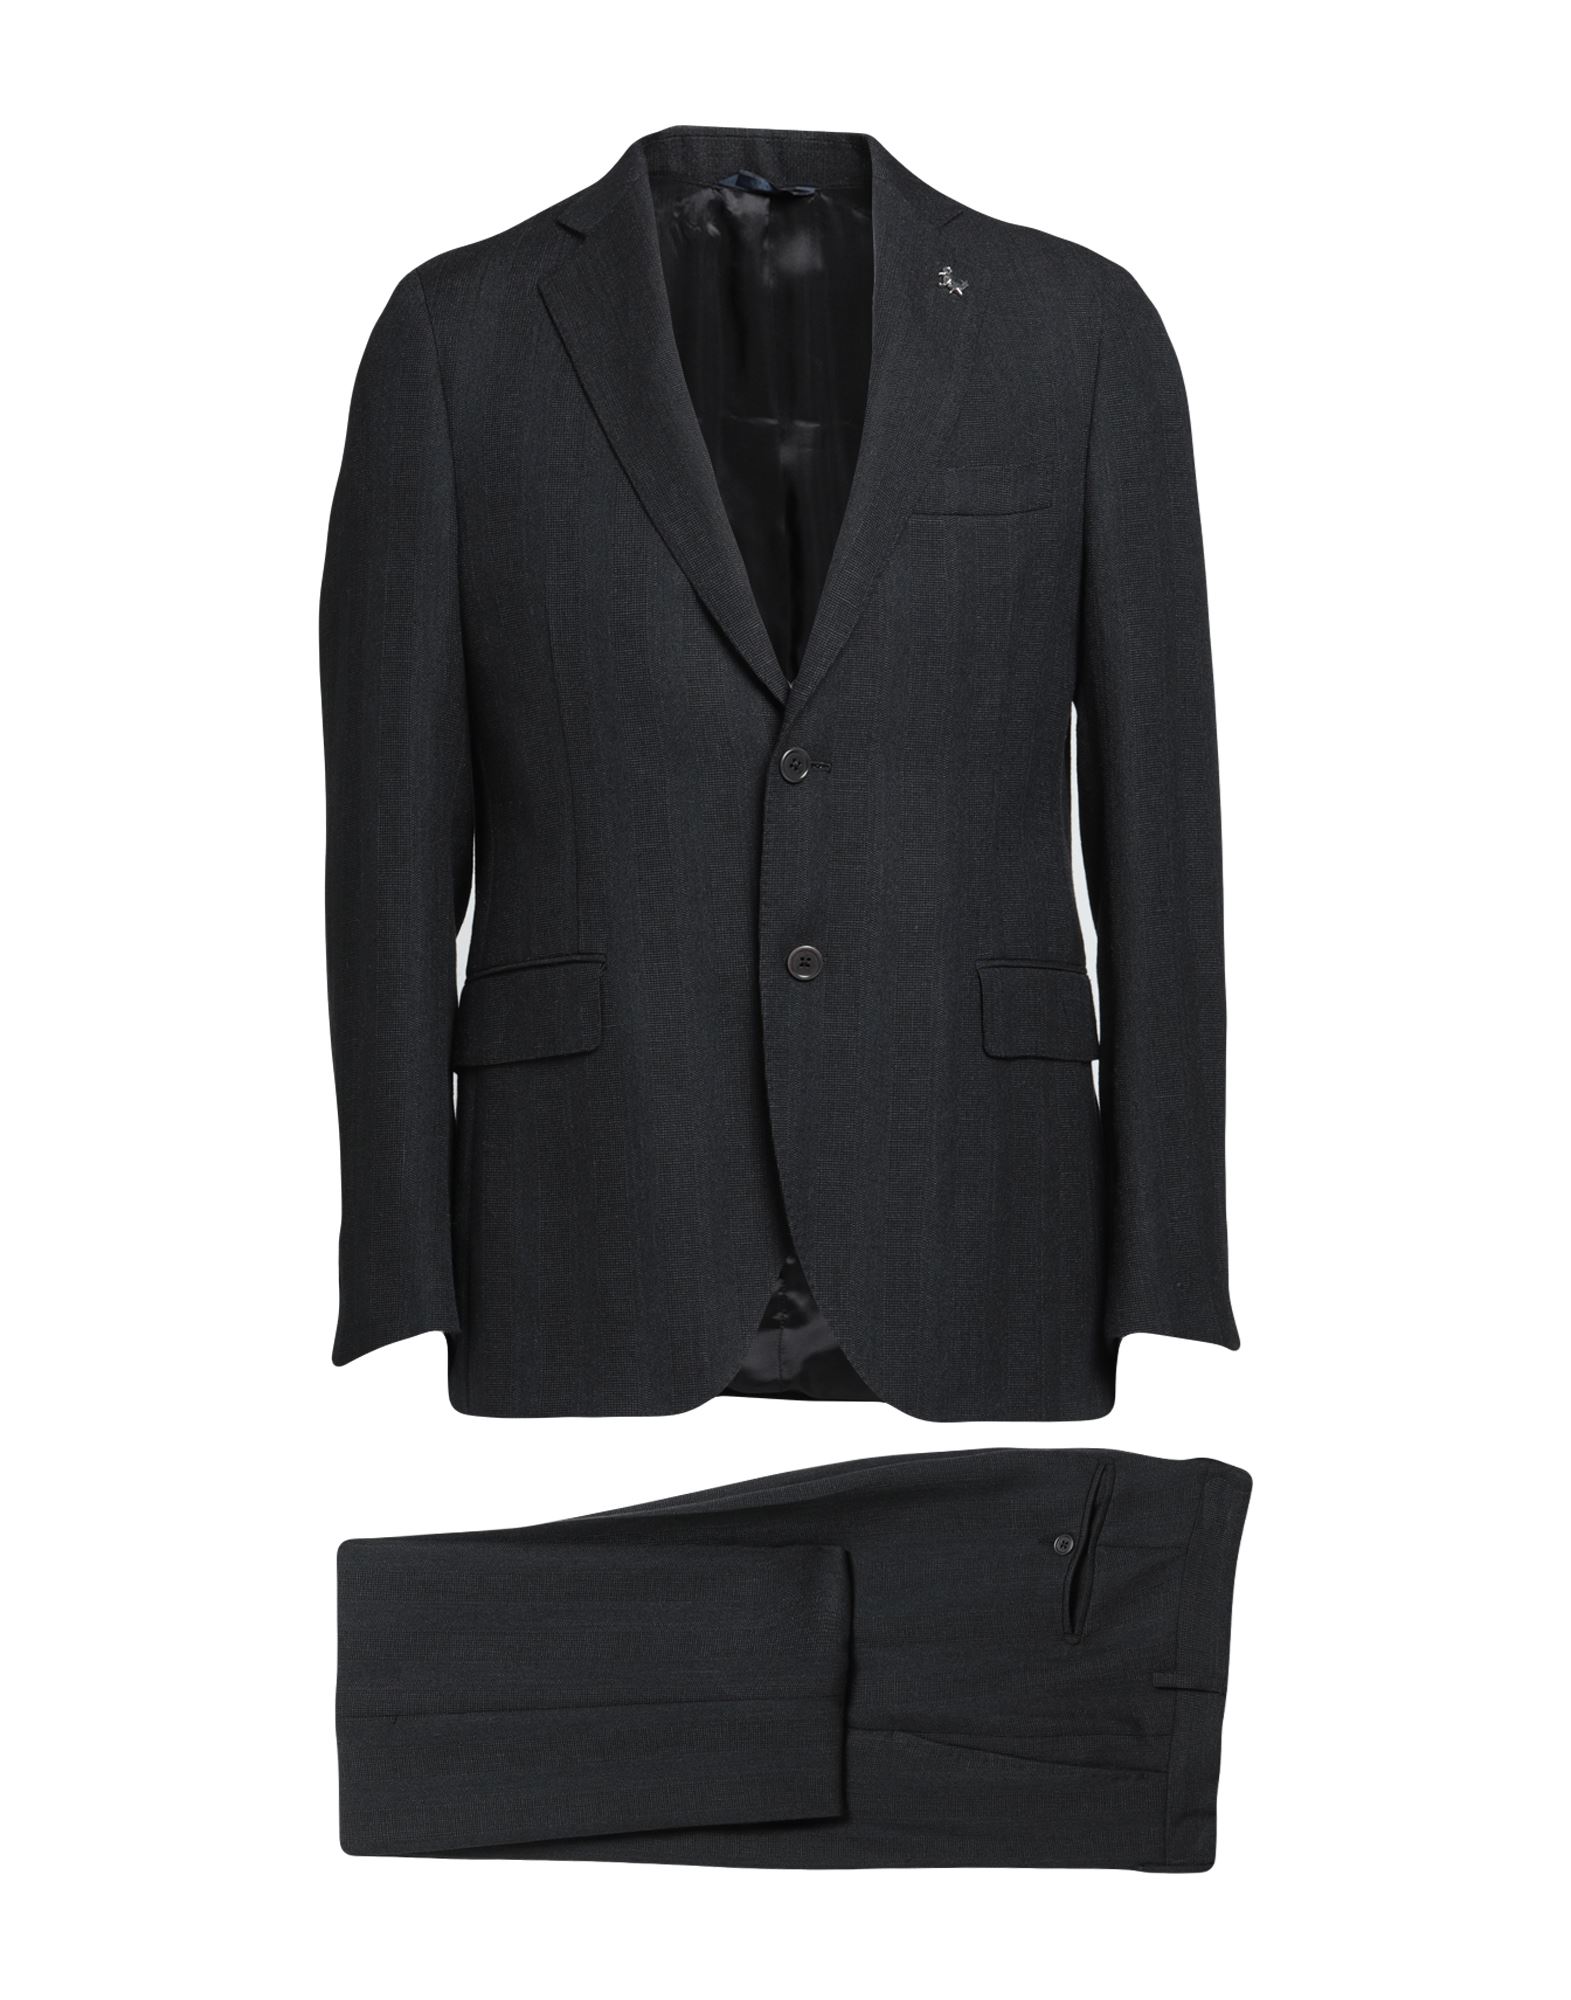 TOMBOLINI Suits | Smart Closet